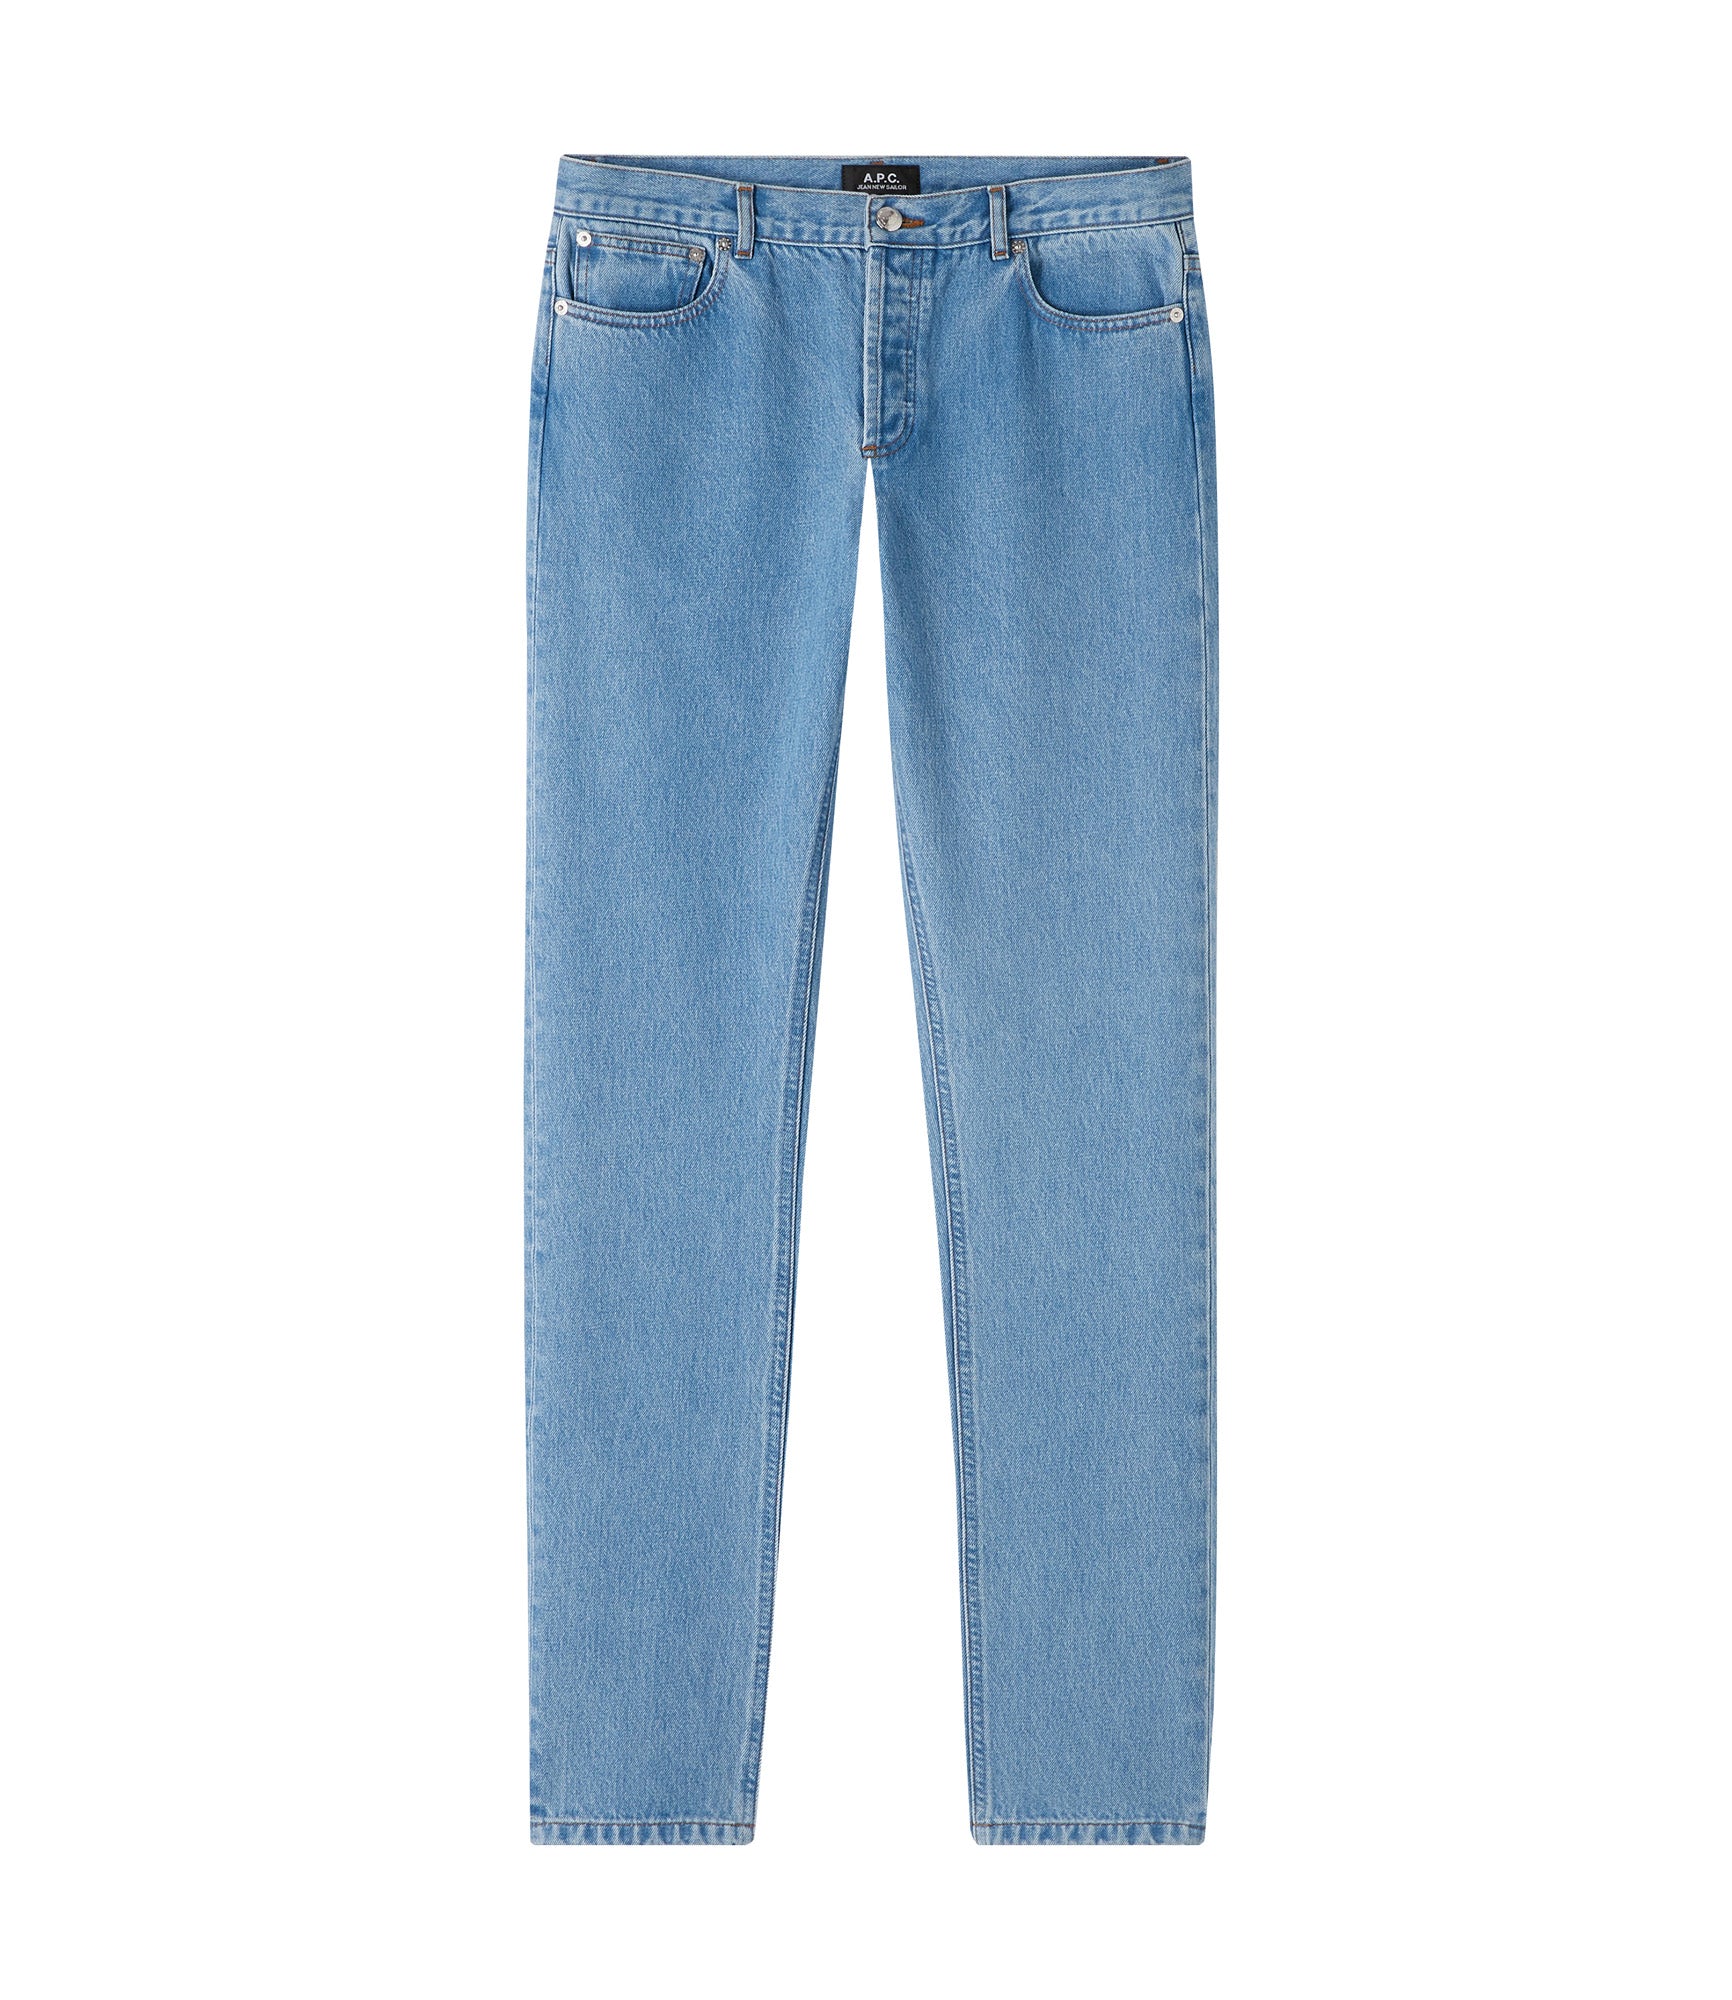 Petit New Standard jeans | Indigo heavily-stonewashed denim